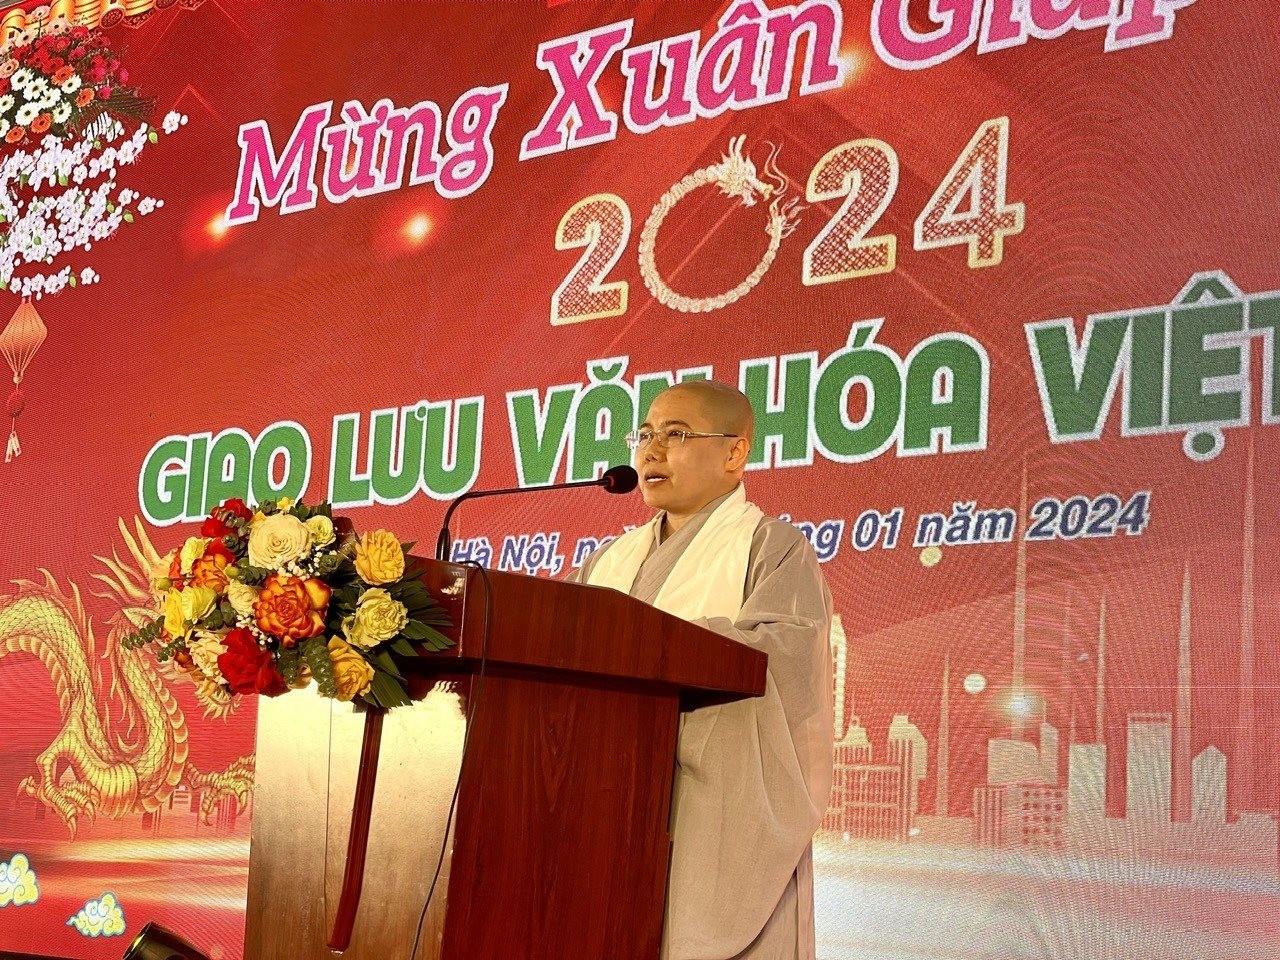 Vietnam - RoK Cultural Exchange to Celebrate New Year 2024